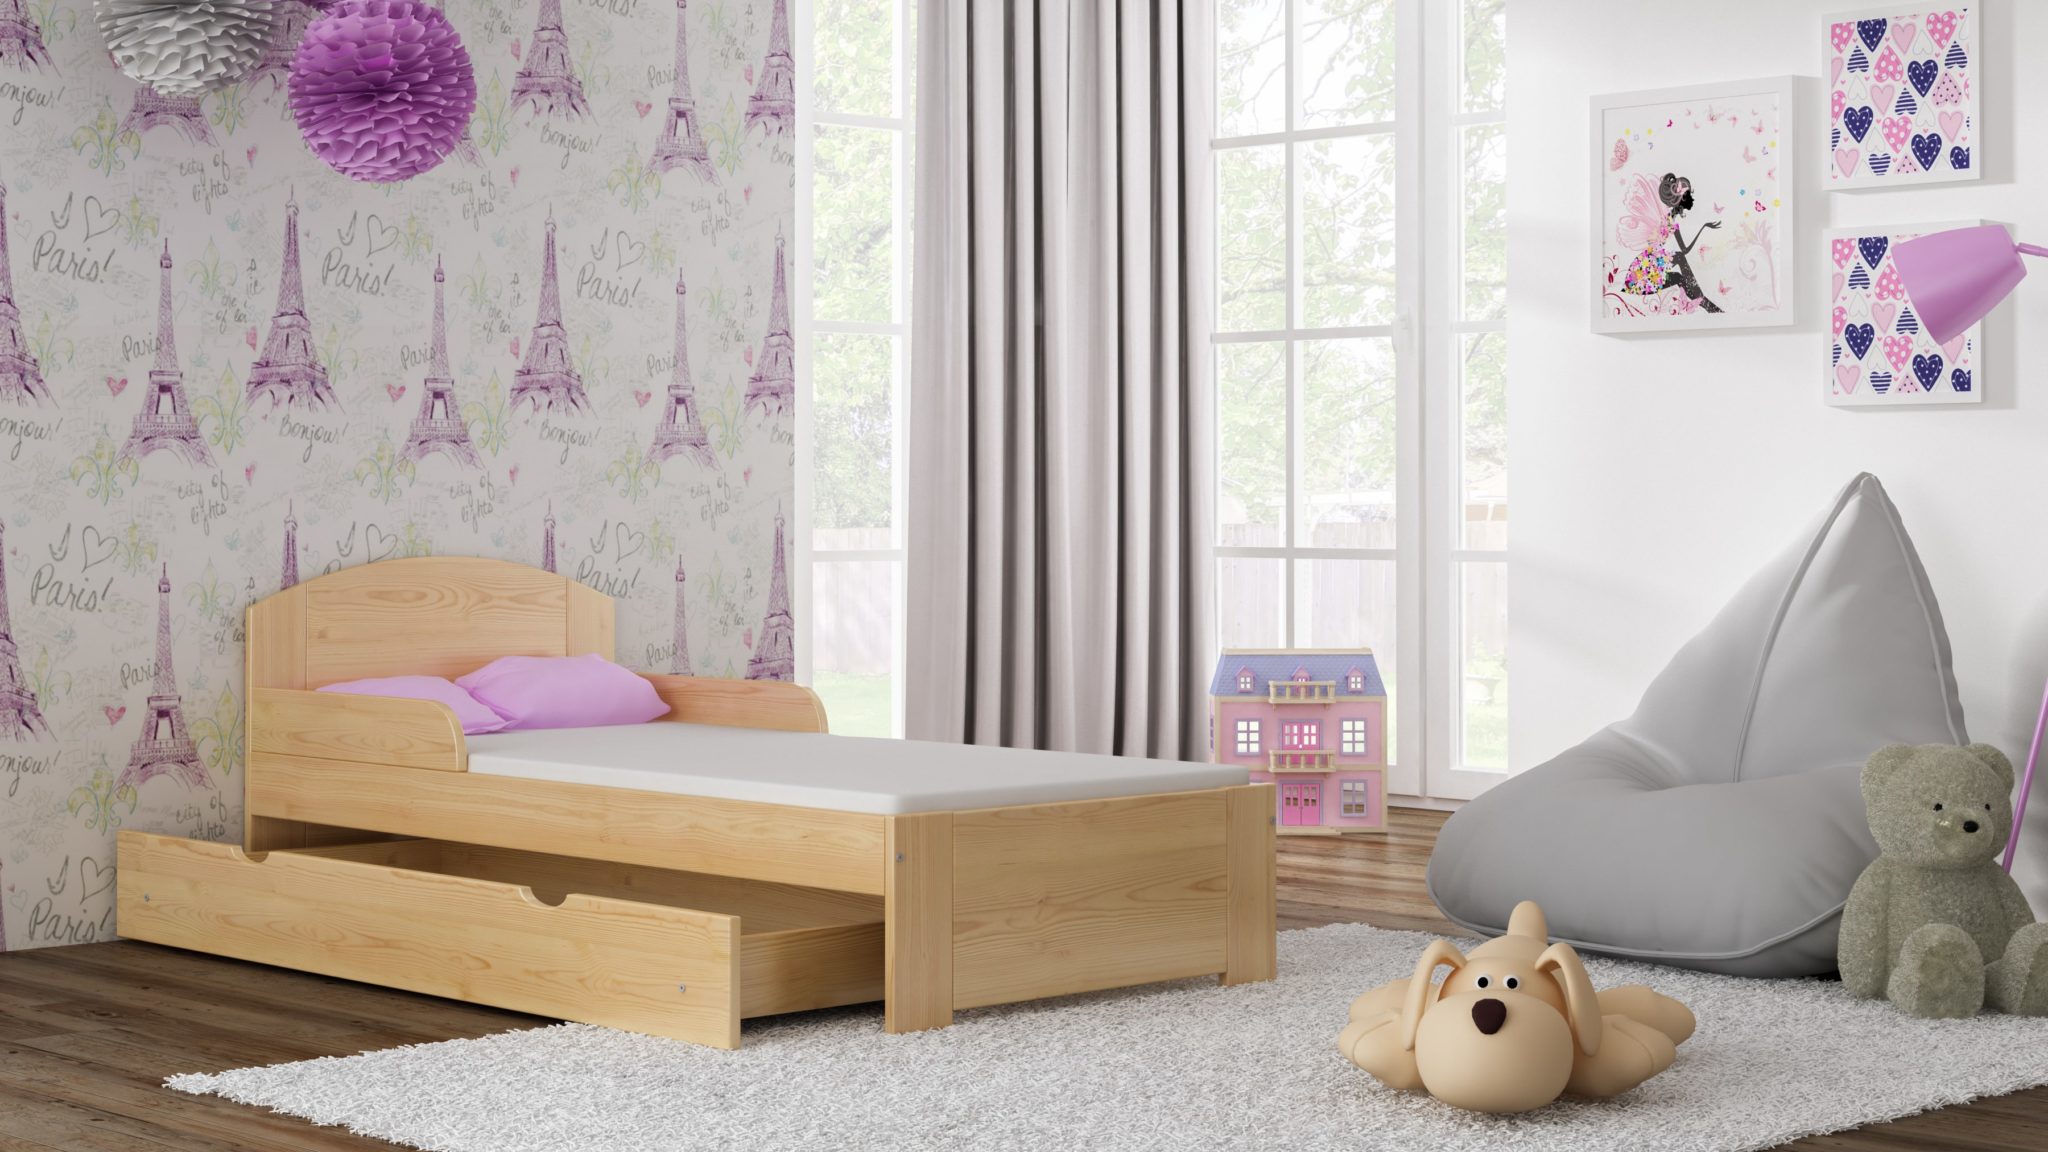 Dětská postel Bili S 180x80 10 barevných variant !!!